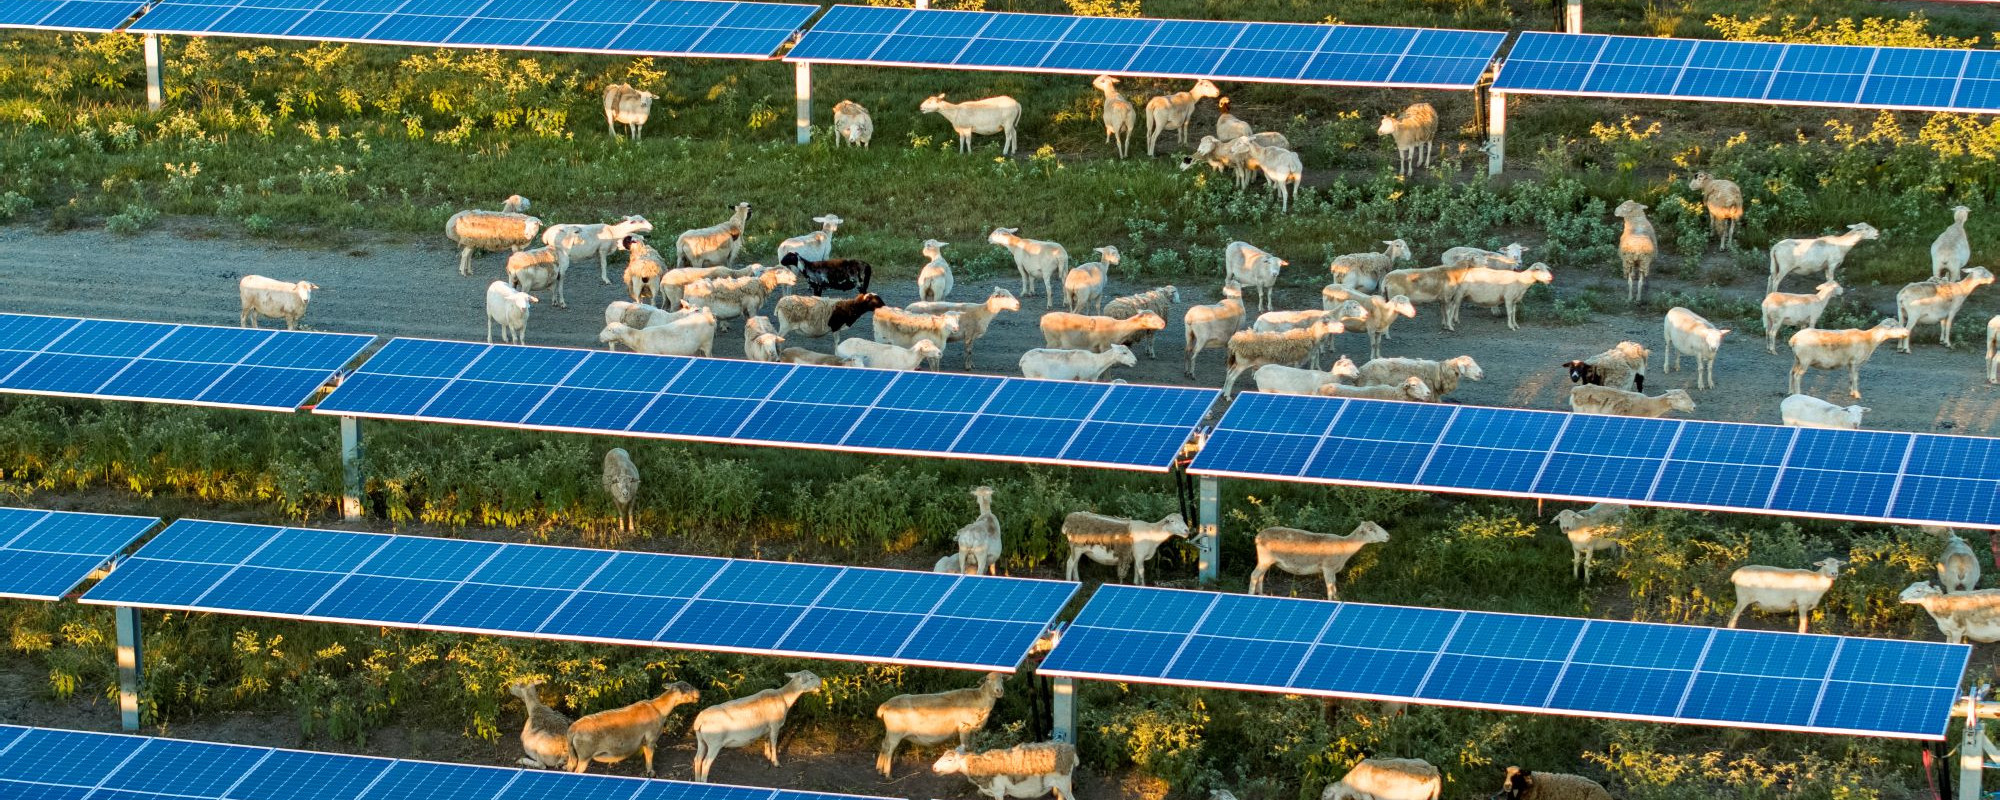 sheep under solar panels